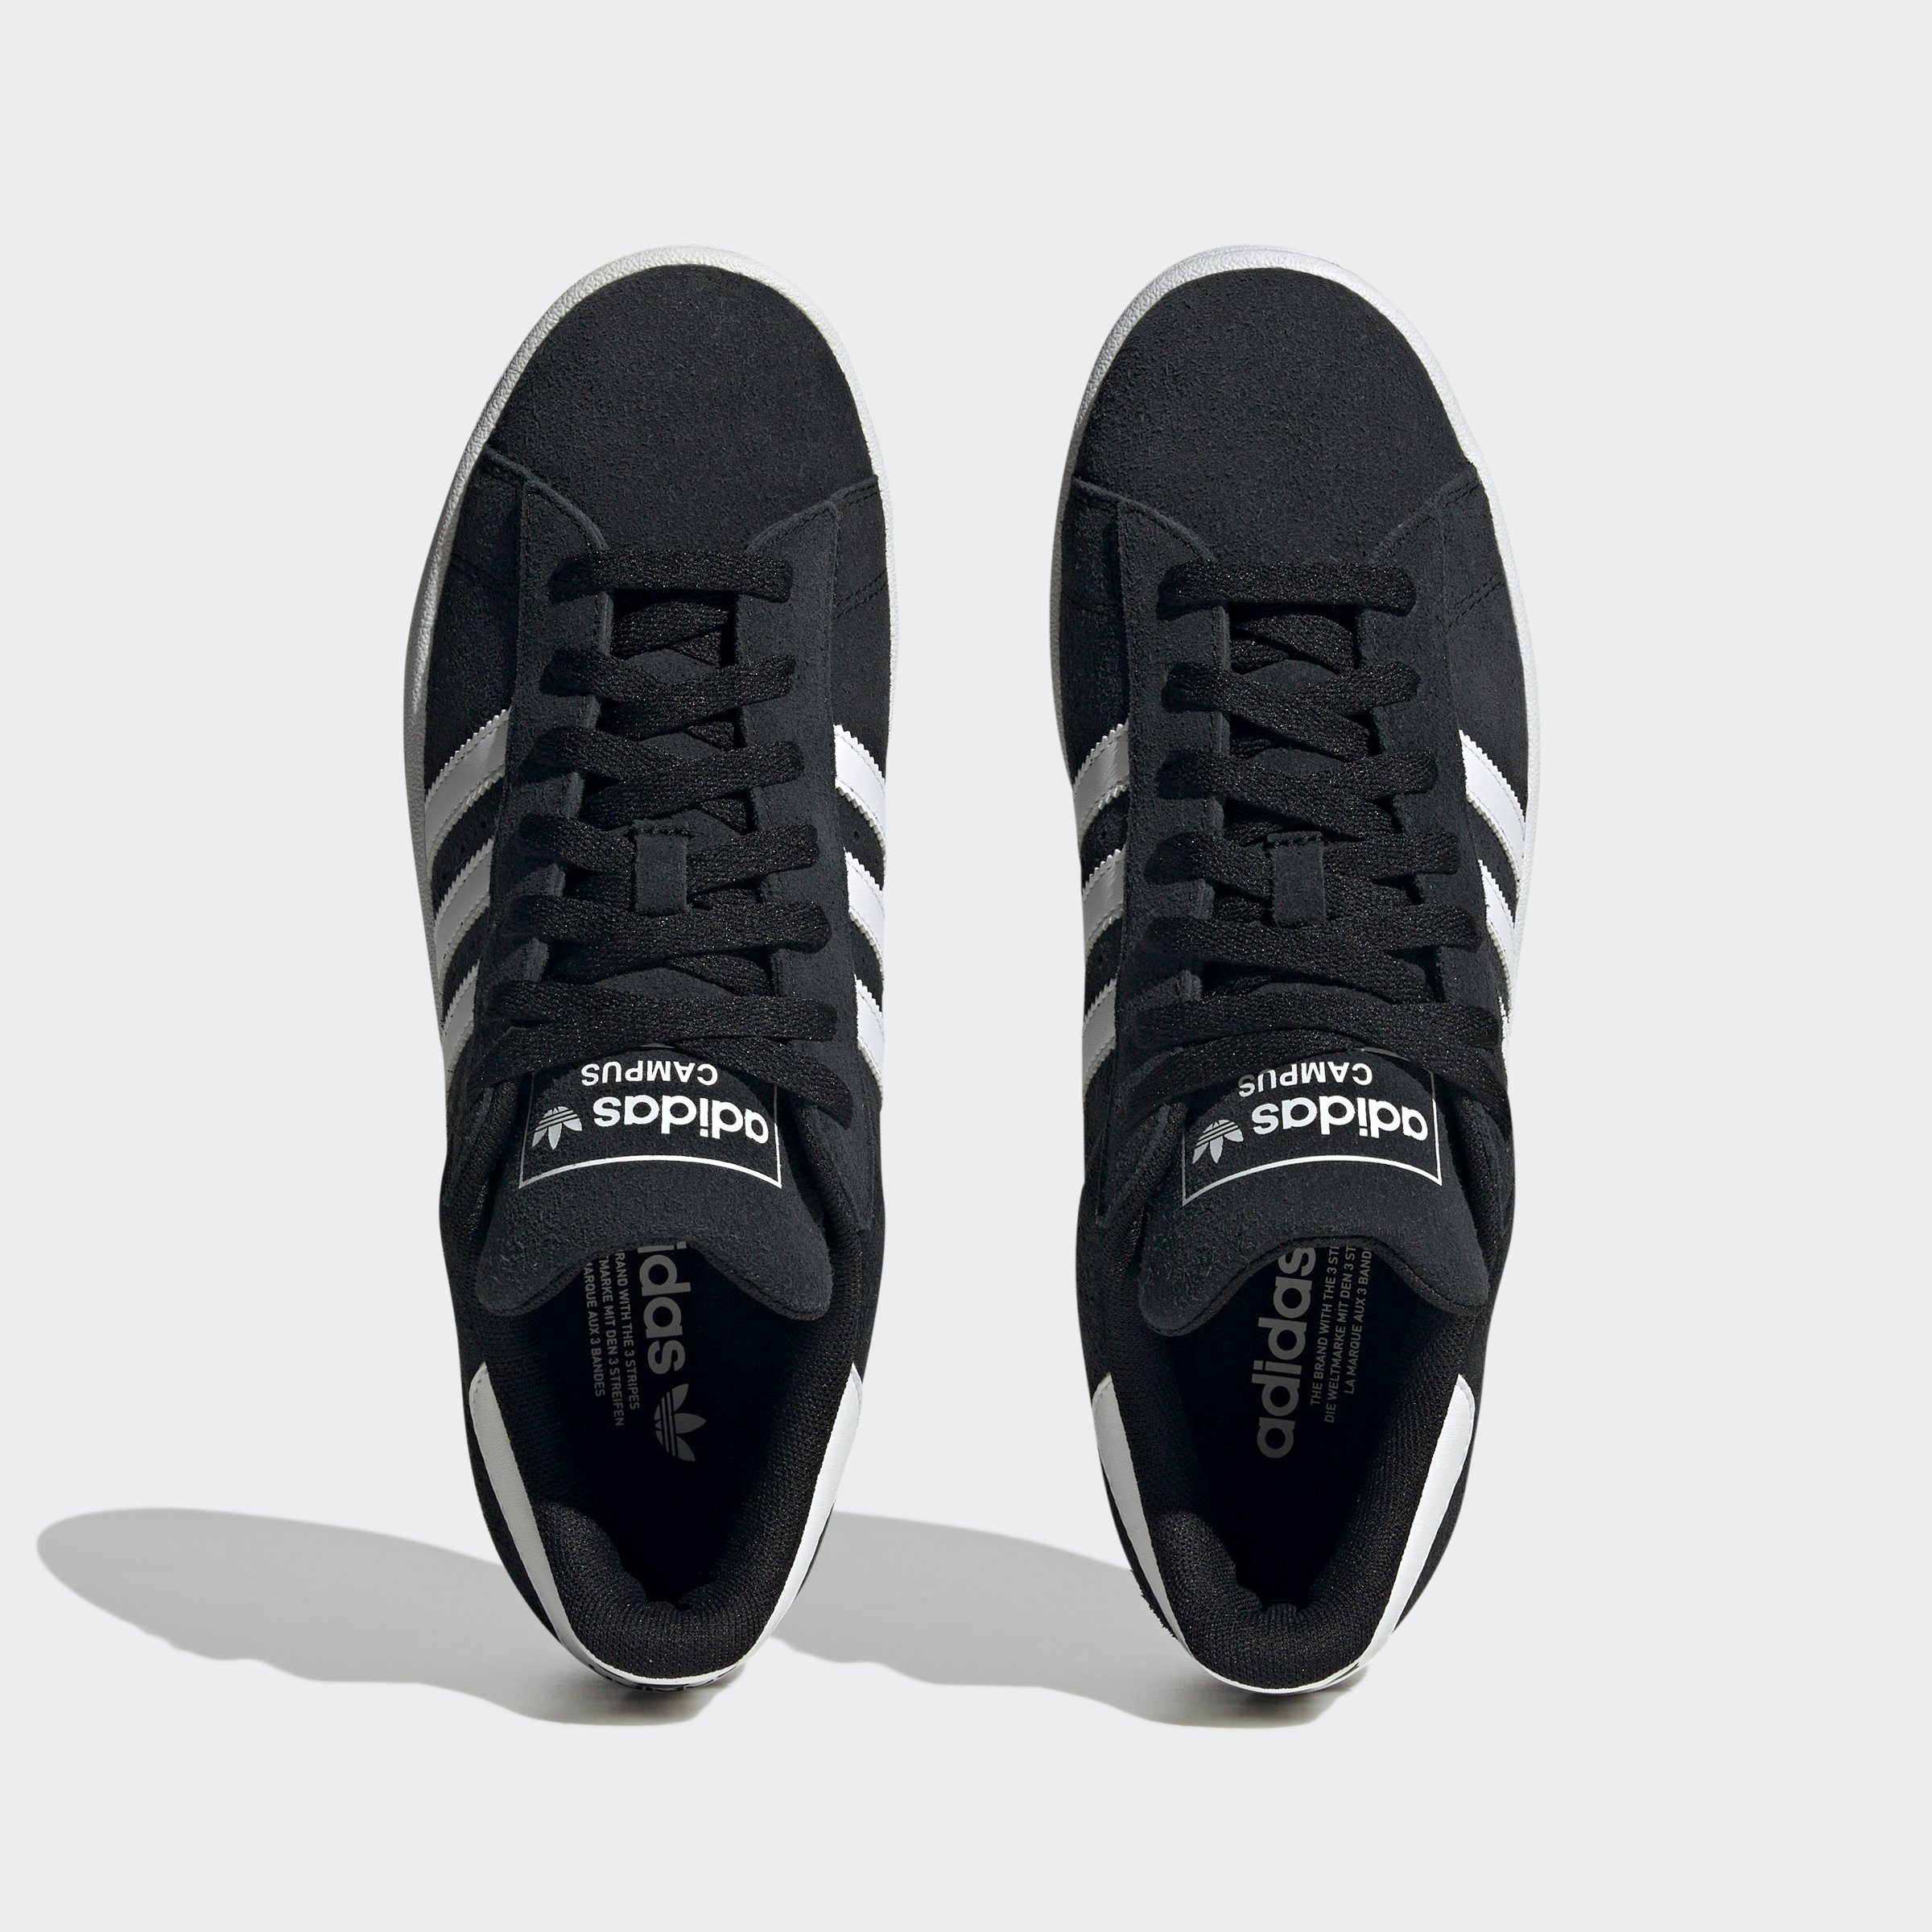 Originals 2.0 Sneaker CAMPUS CBLACK/FTWWHT/FTWWHT adidas